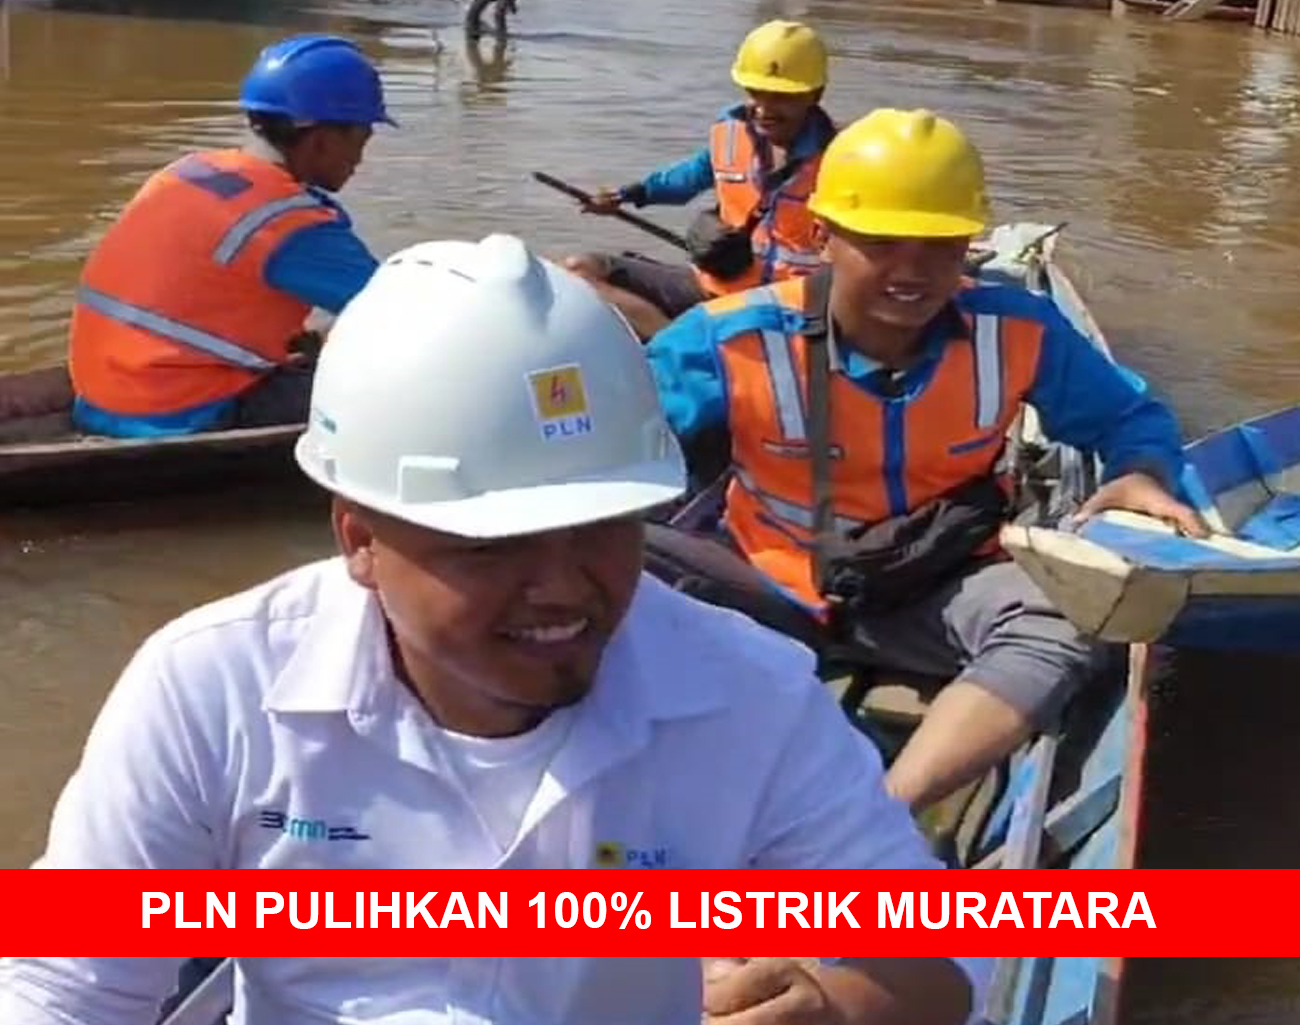 PLN Pulihkan 100% Listrik Muratara Yang Terdampak Banjir